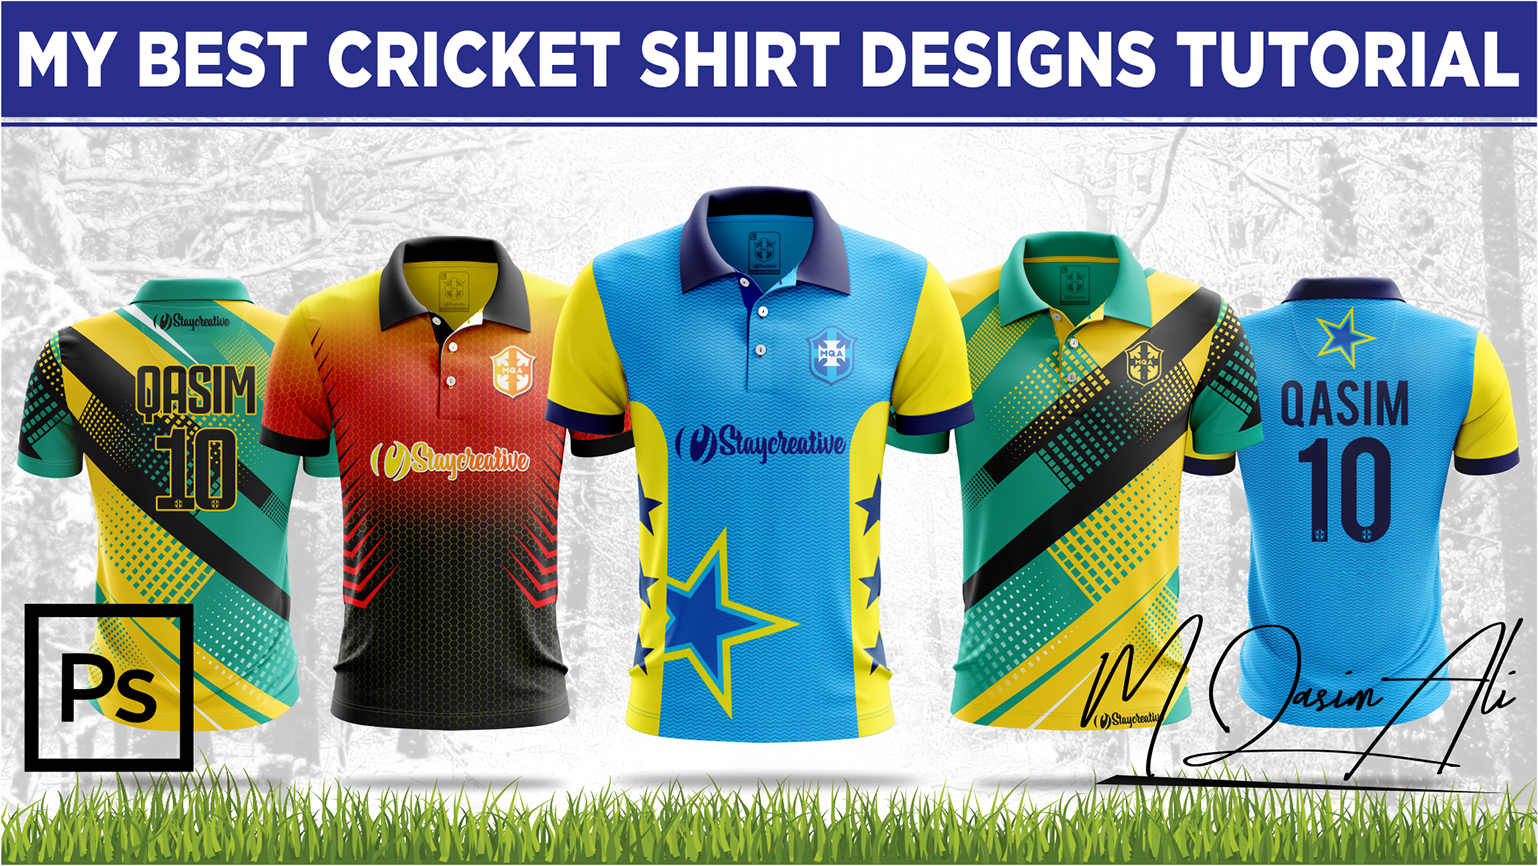 new cricket jersey 2020